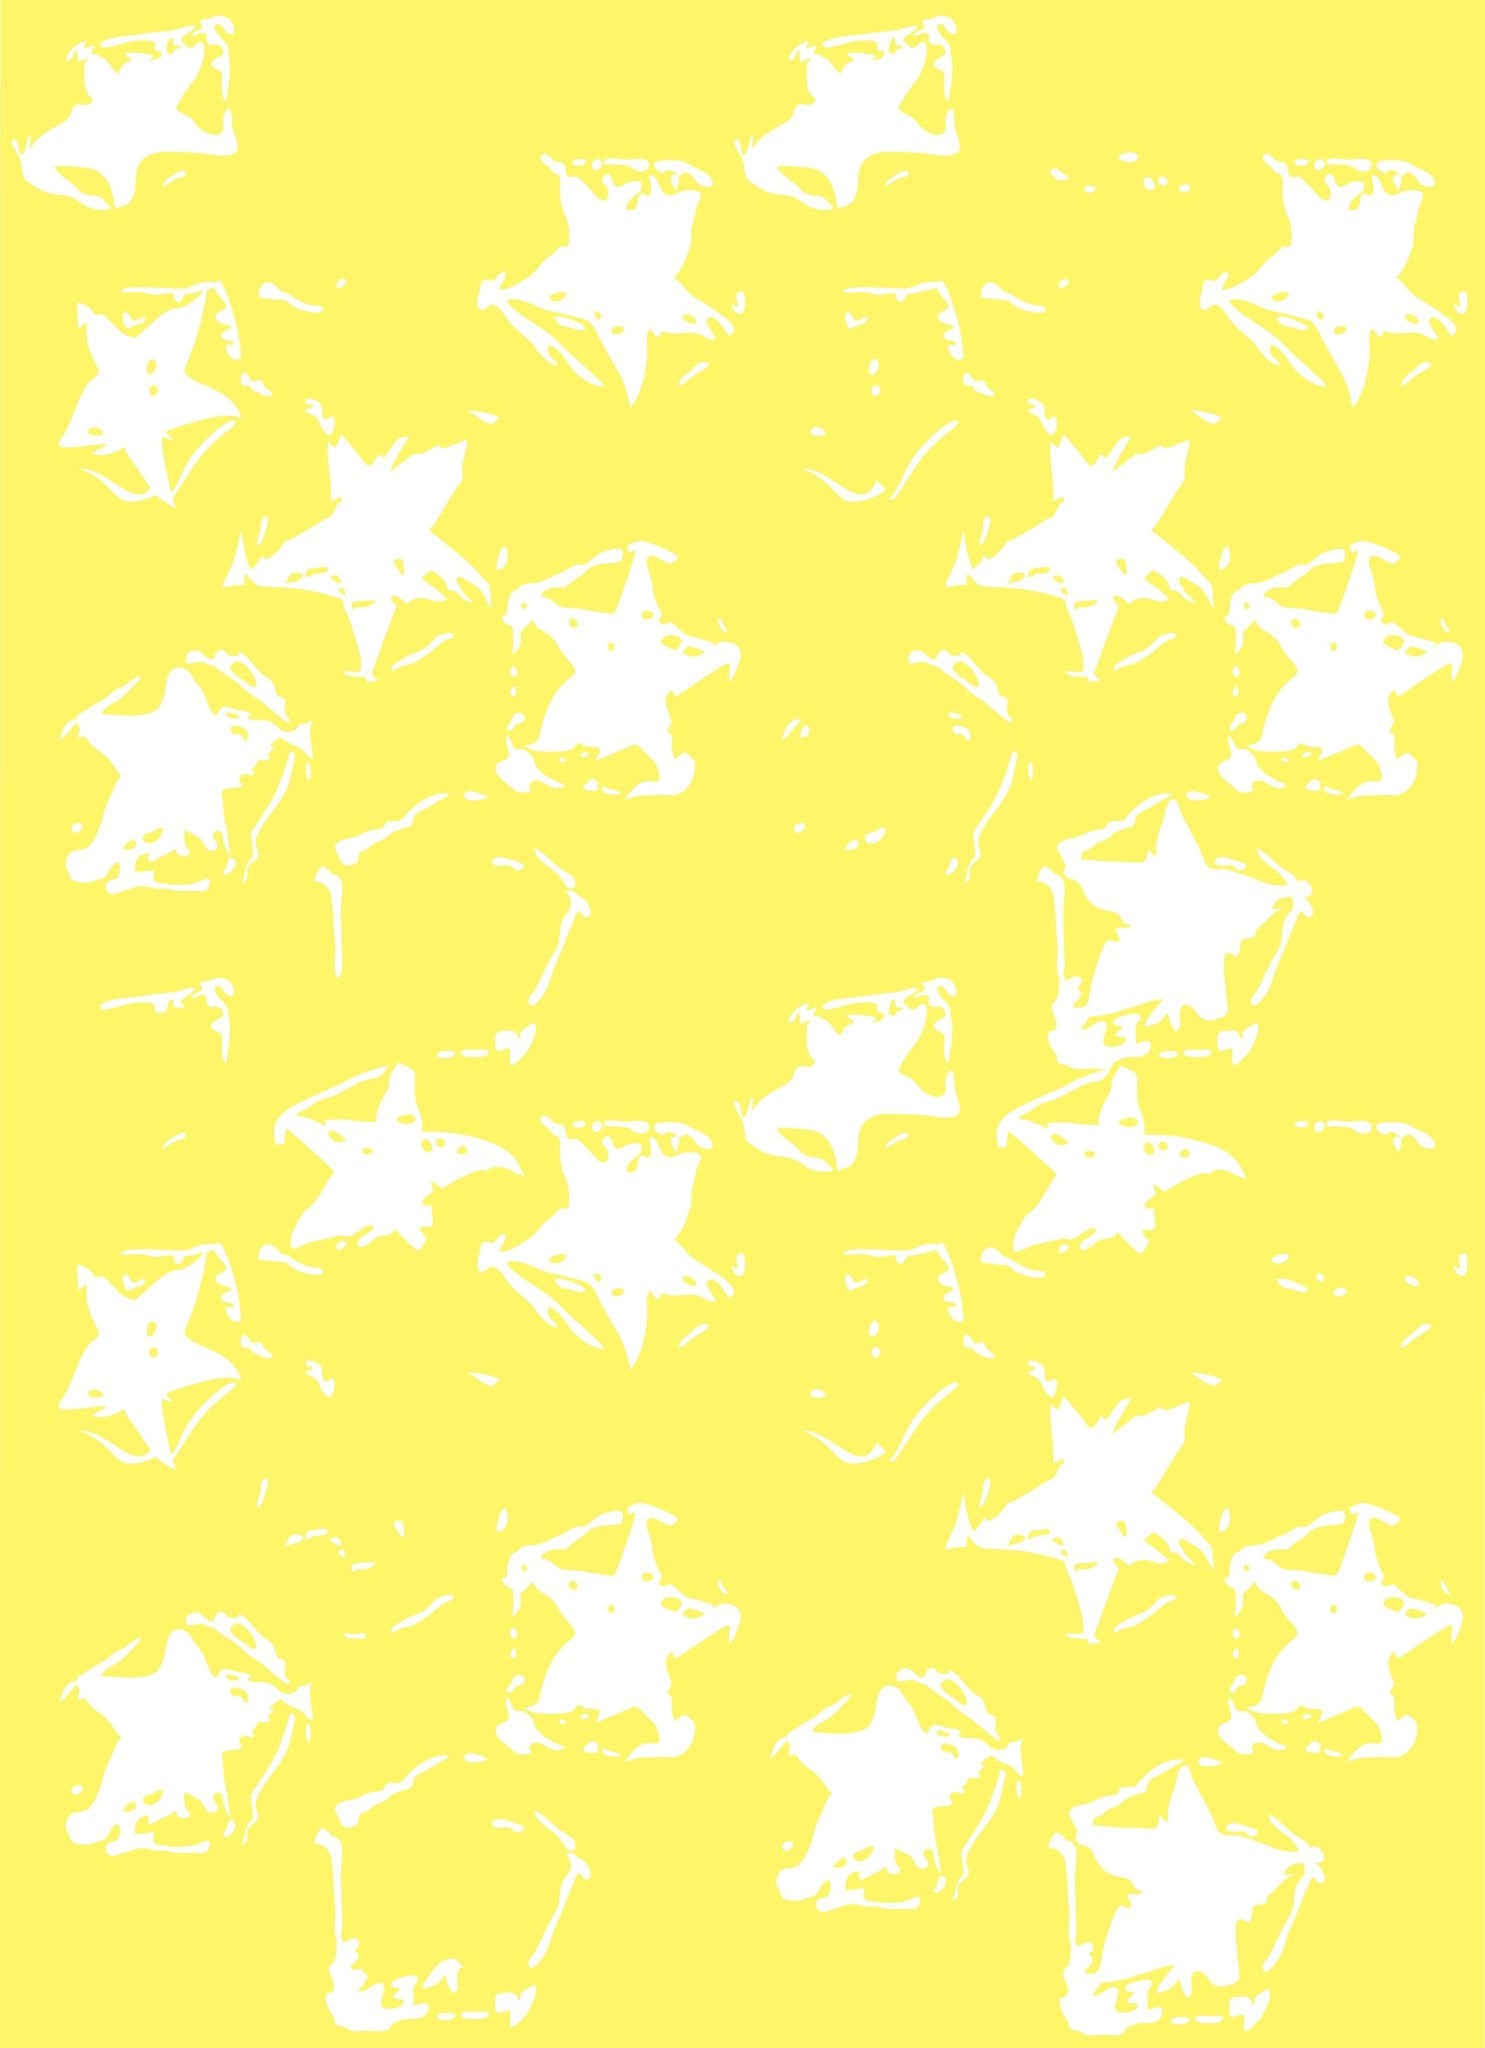 Star Wallpaper - Yellow